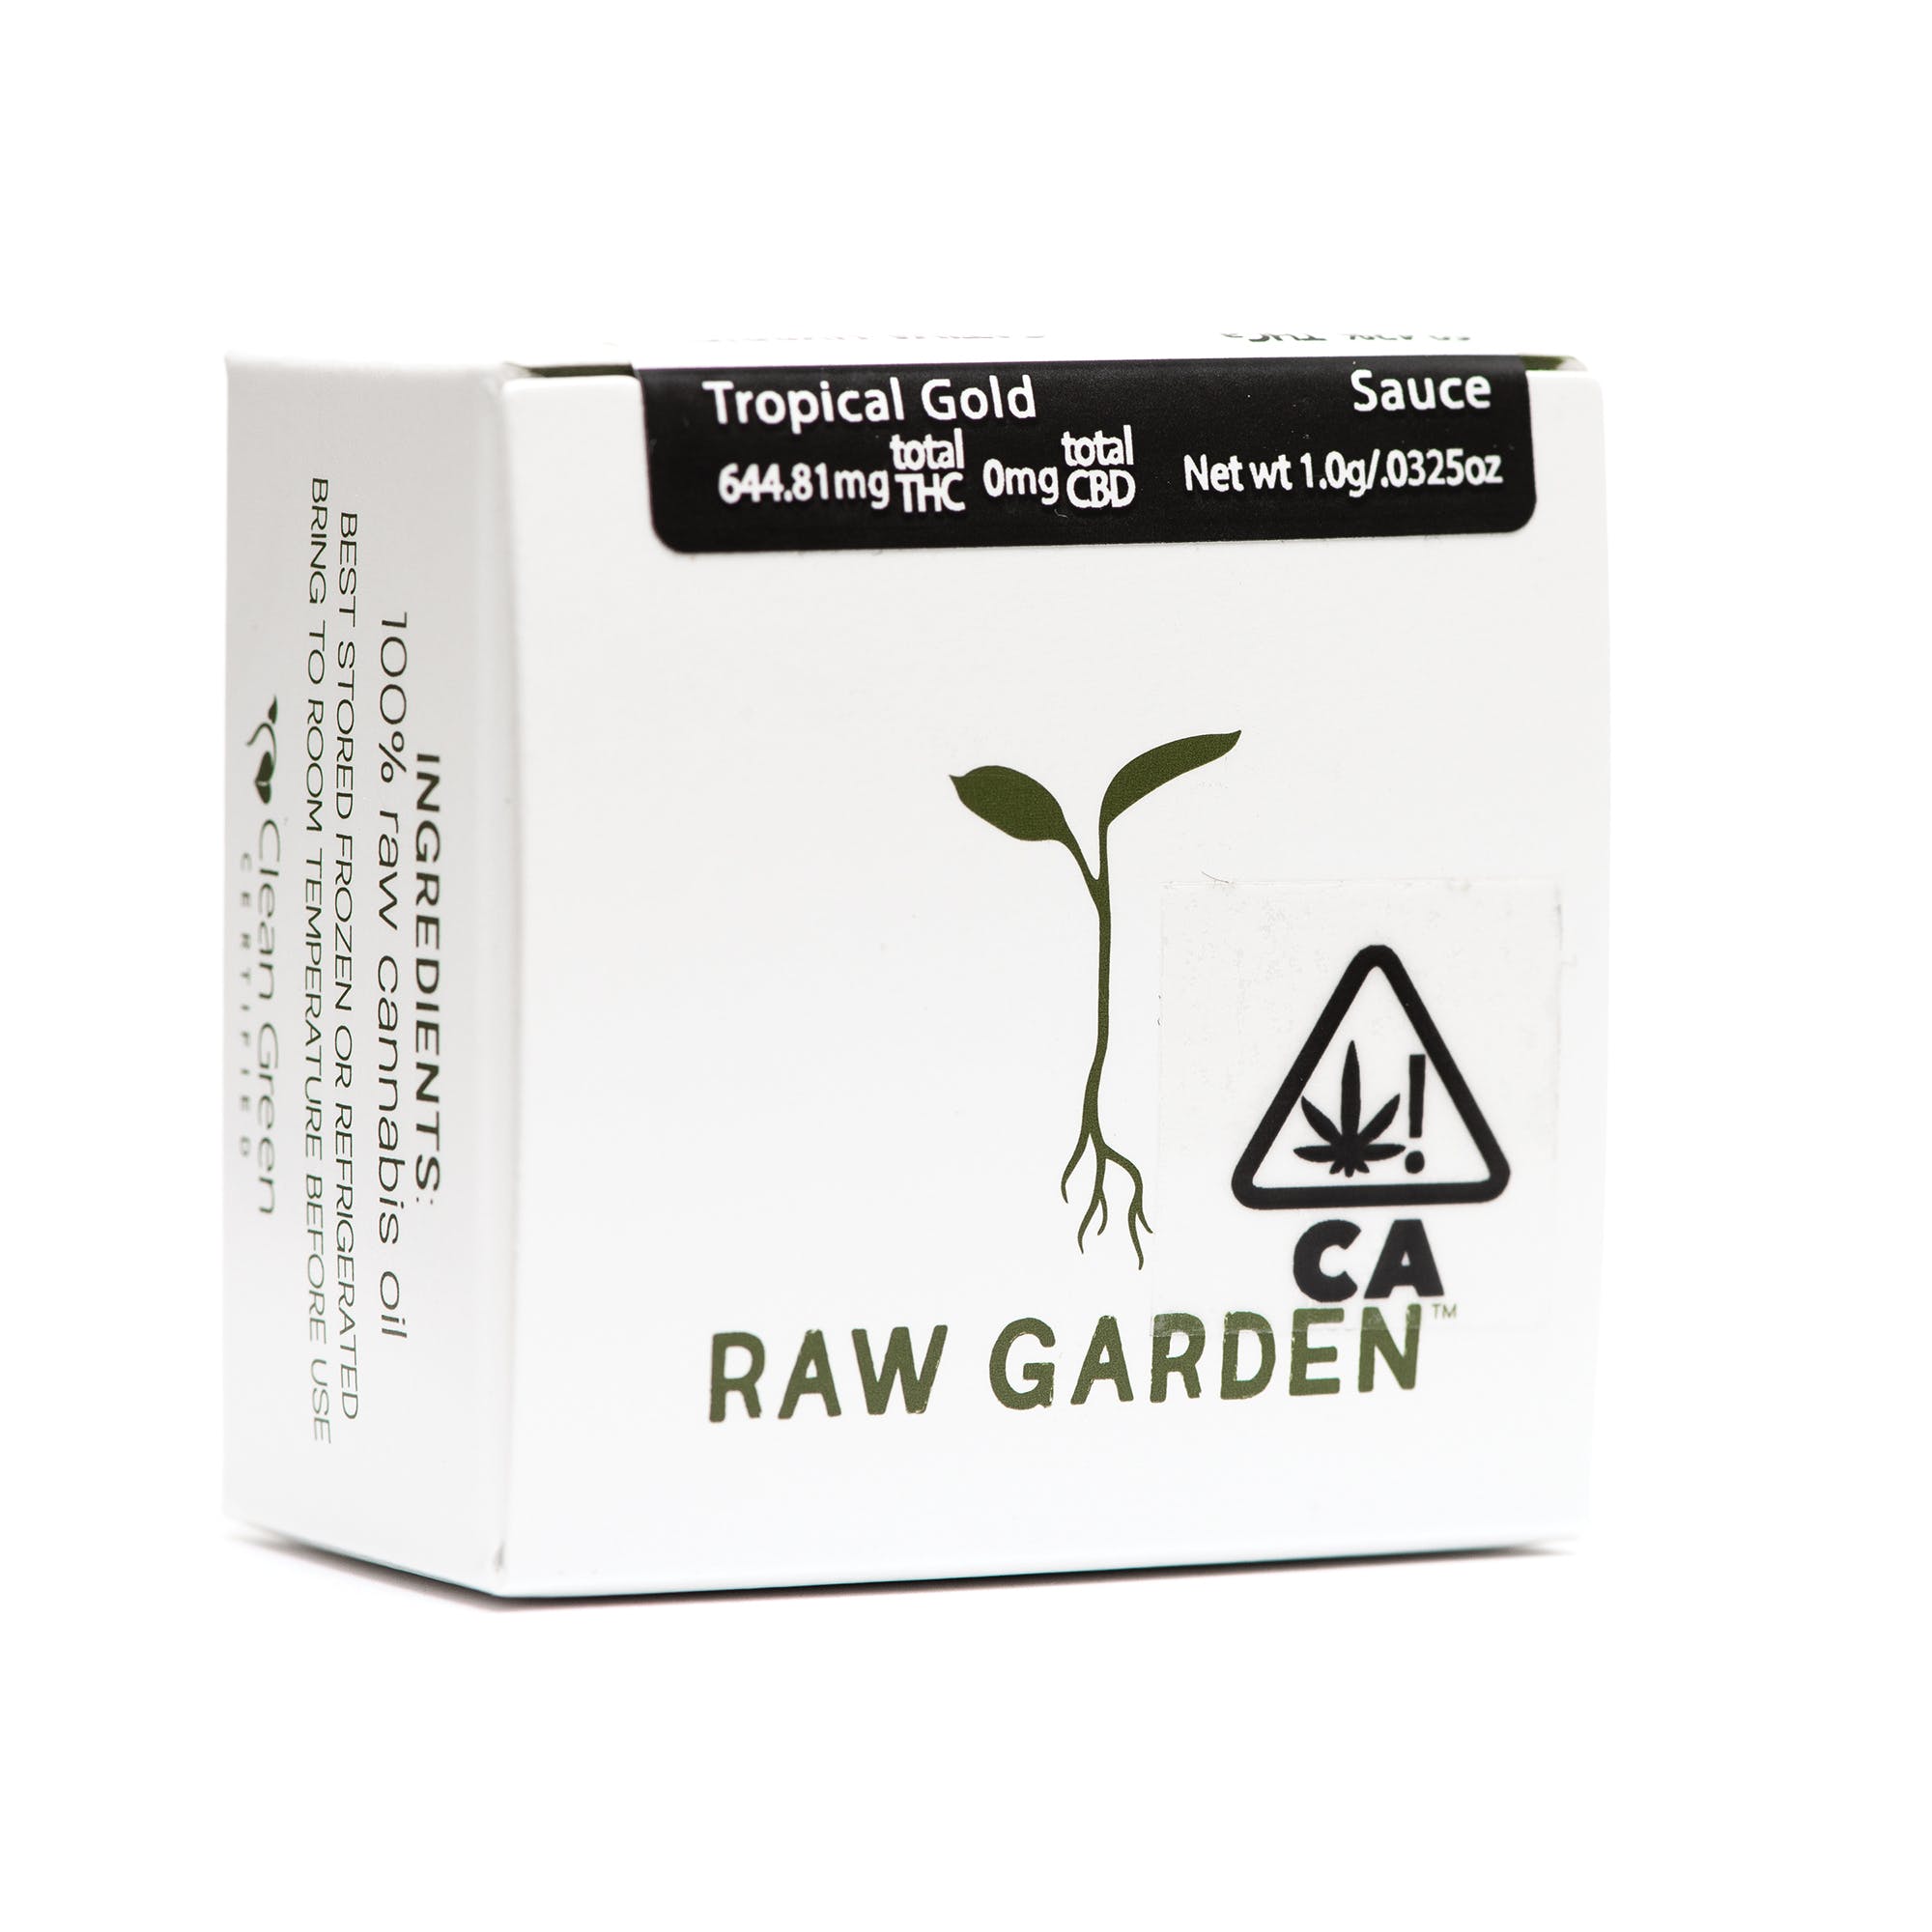 Medical/Online(21+) Raw Garden - Tropical Gold Sauce